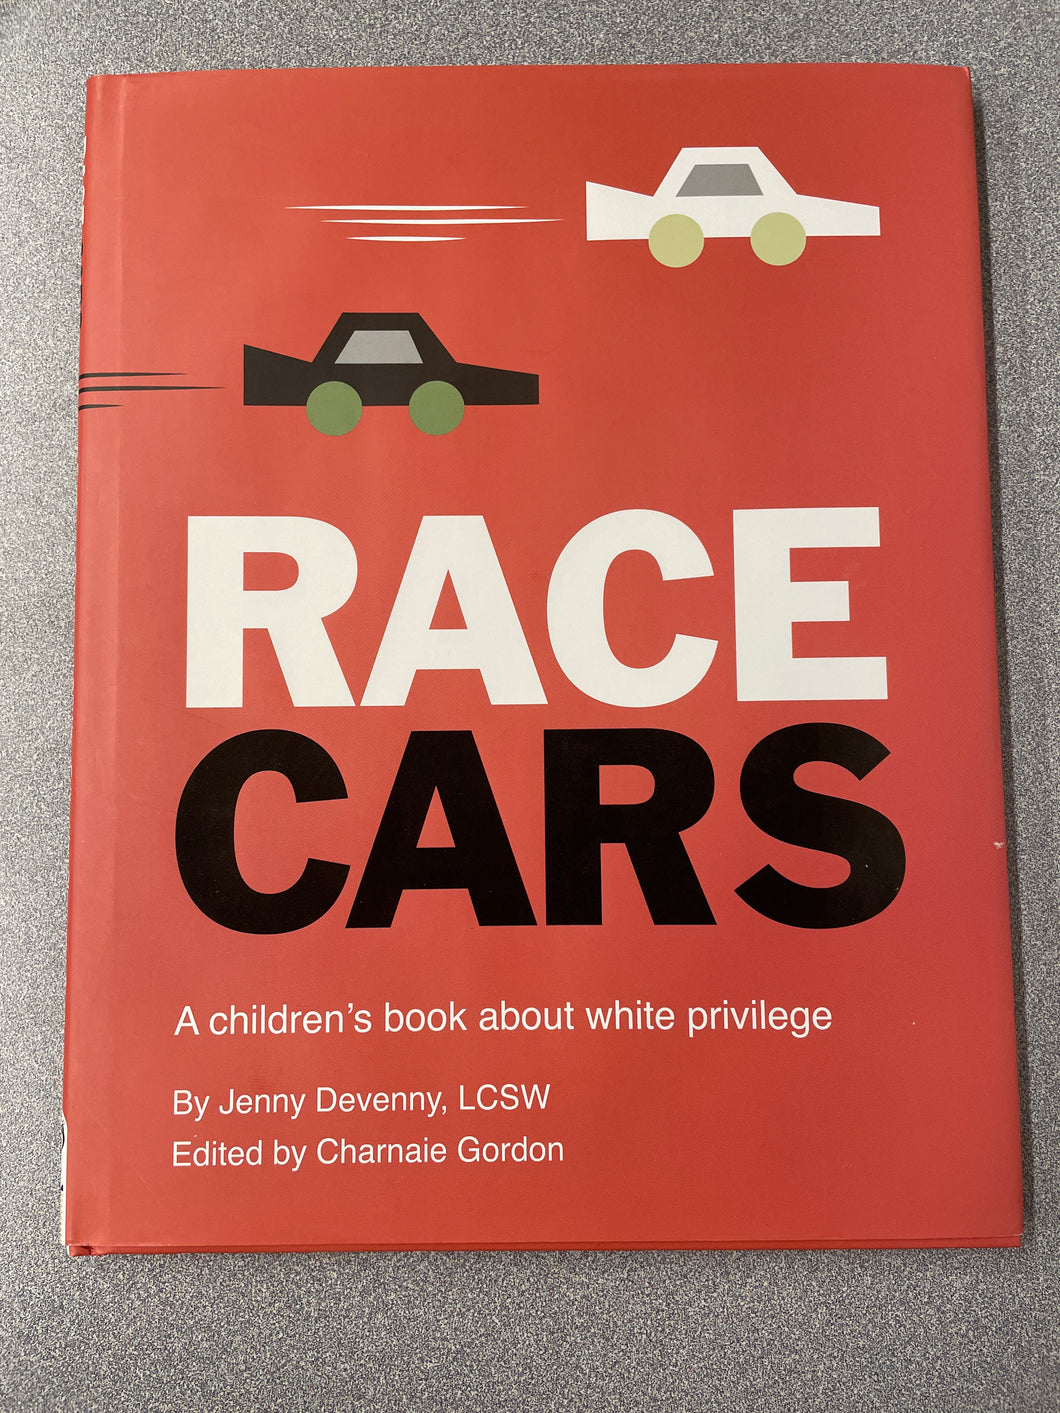 Devenny, Jenny, Race Cars: A Children's Book About White Privilege [2021] CP 3/24